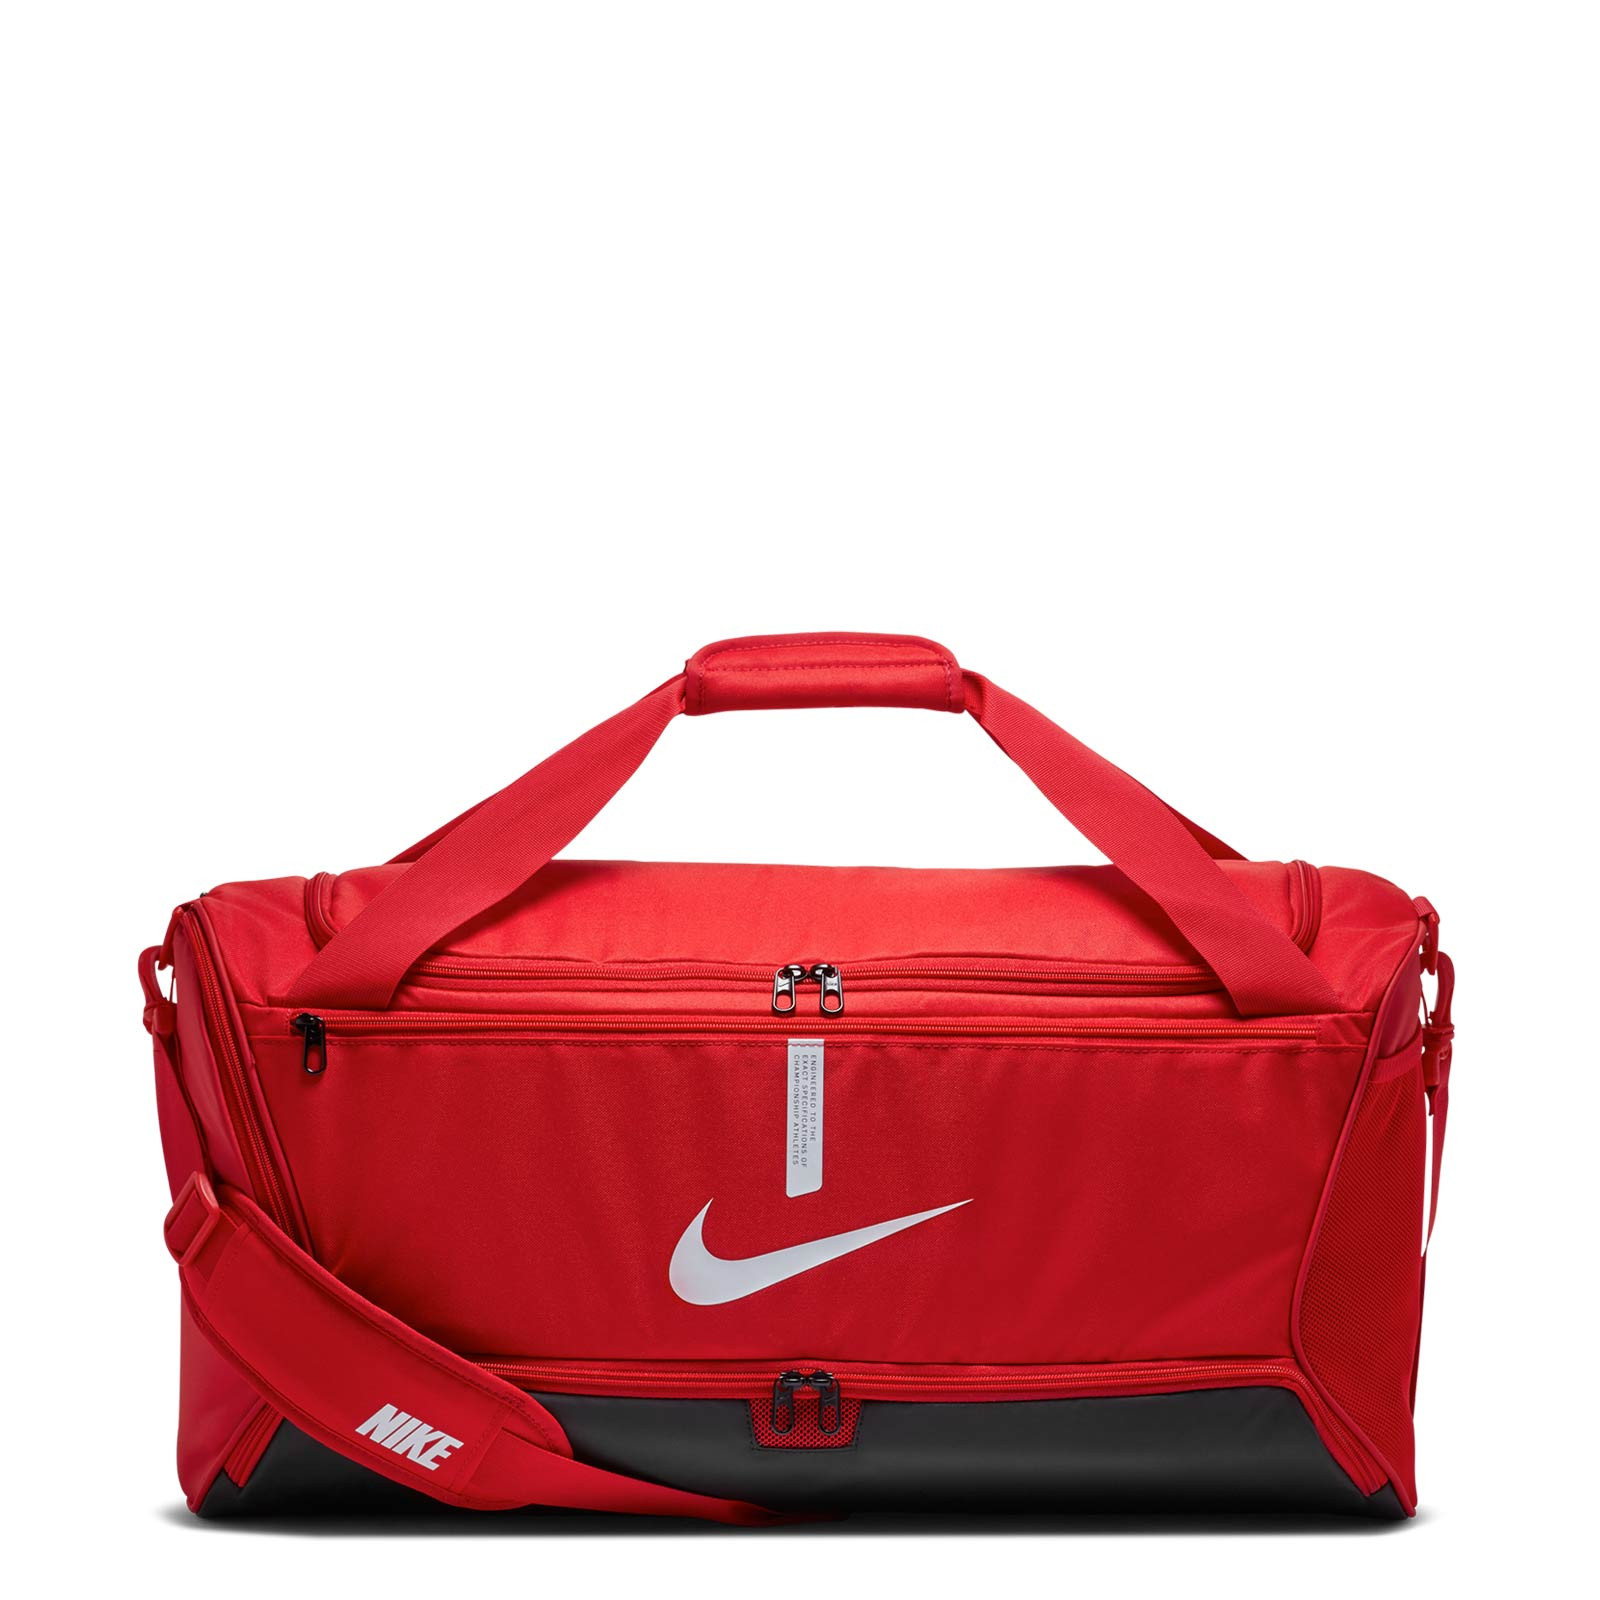 Bolsa de deporte Nike Academy Team mediana roja